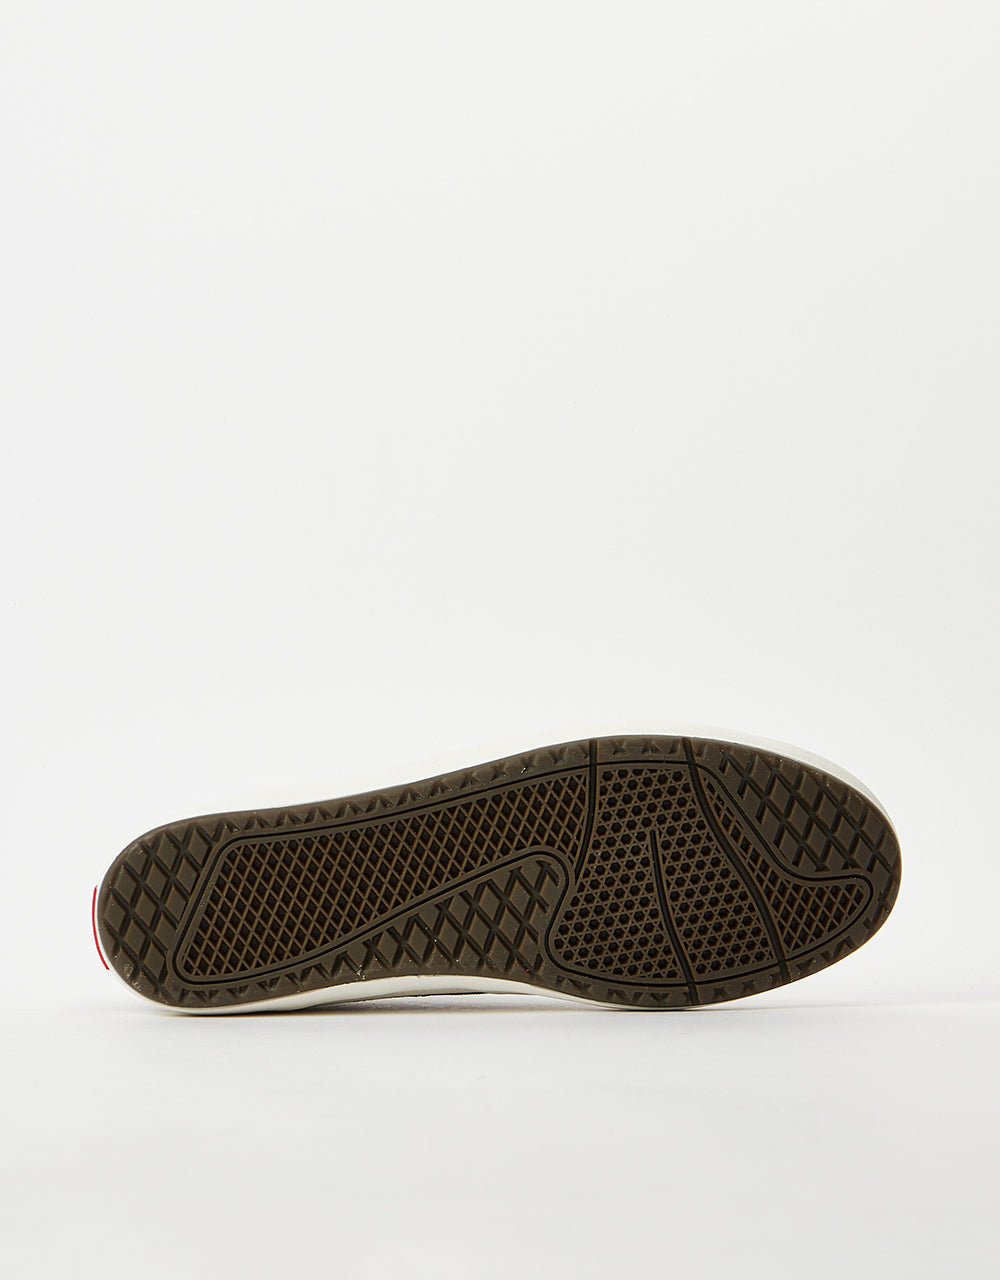 Vans Lizzie Low Skate Shoes -  Sepia/Marshmallow